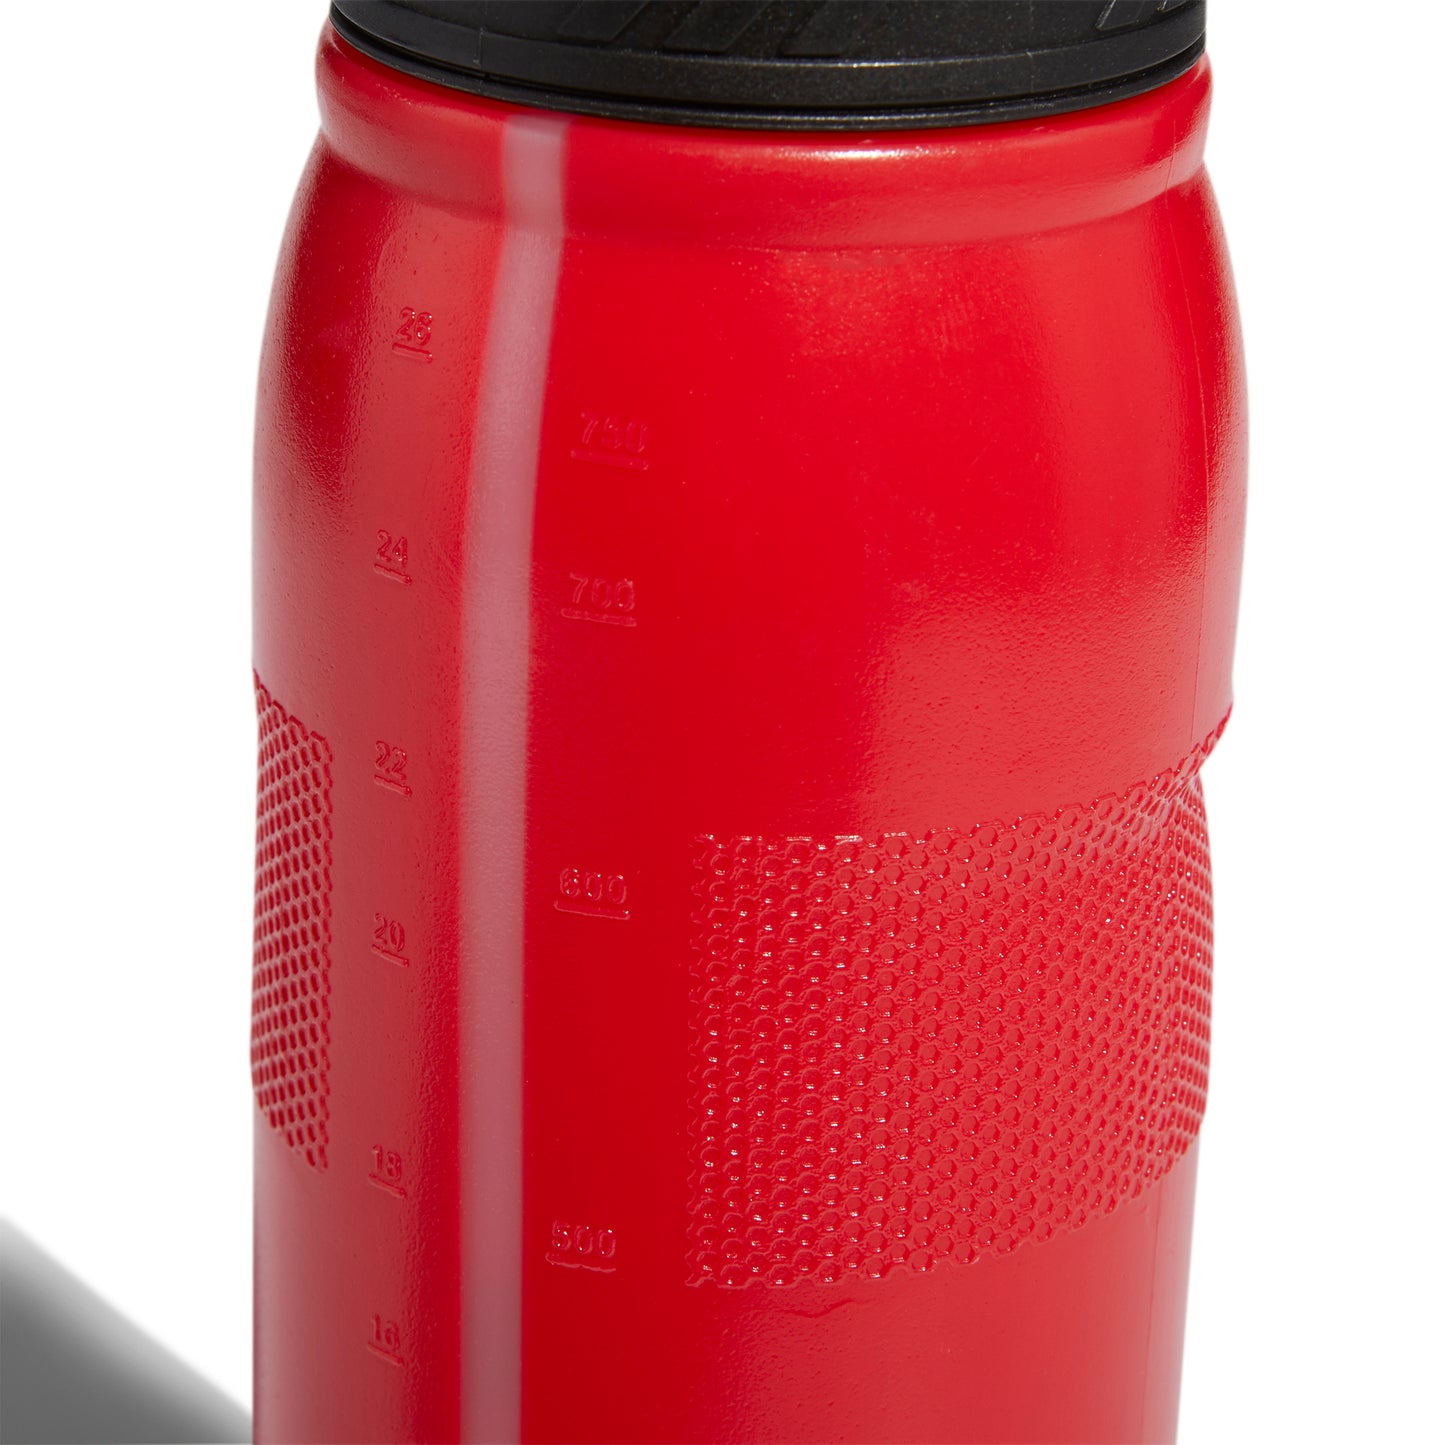 adidas Stadium 26 oz  Plastic Water Bottle Bottle Red